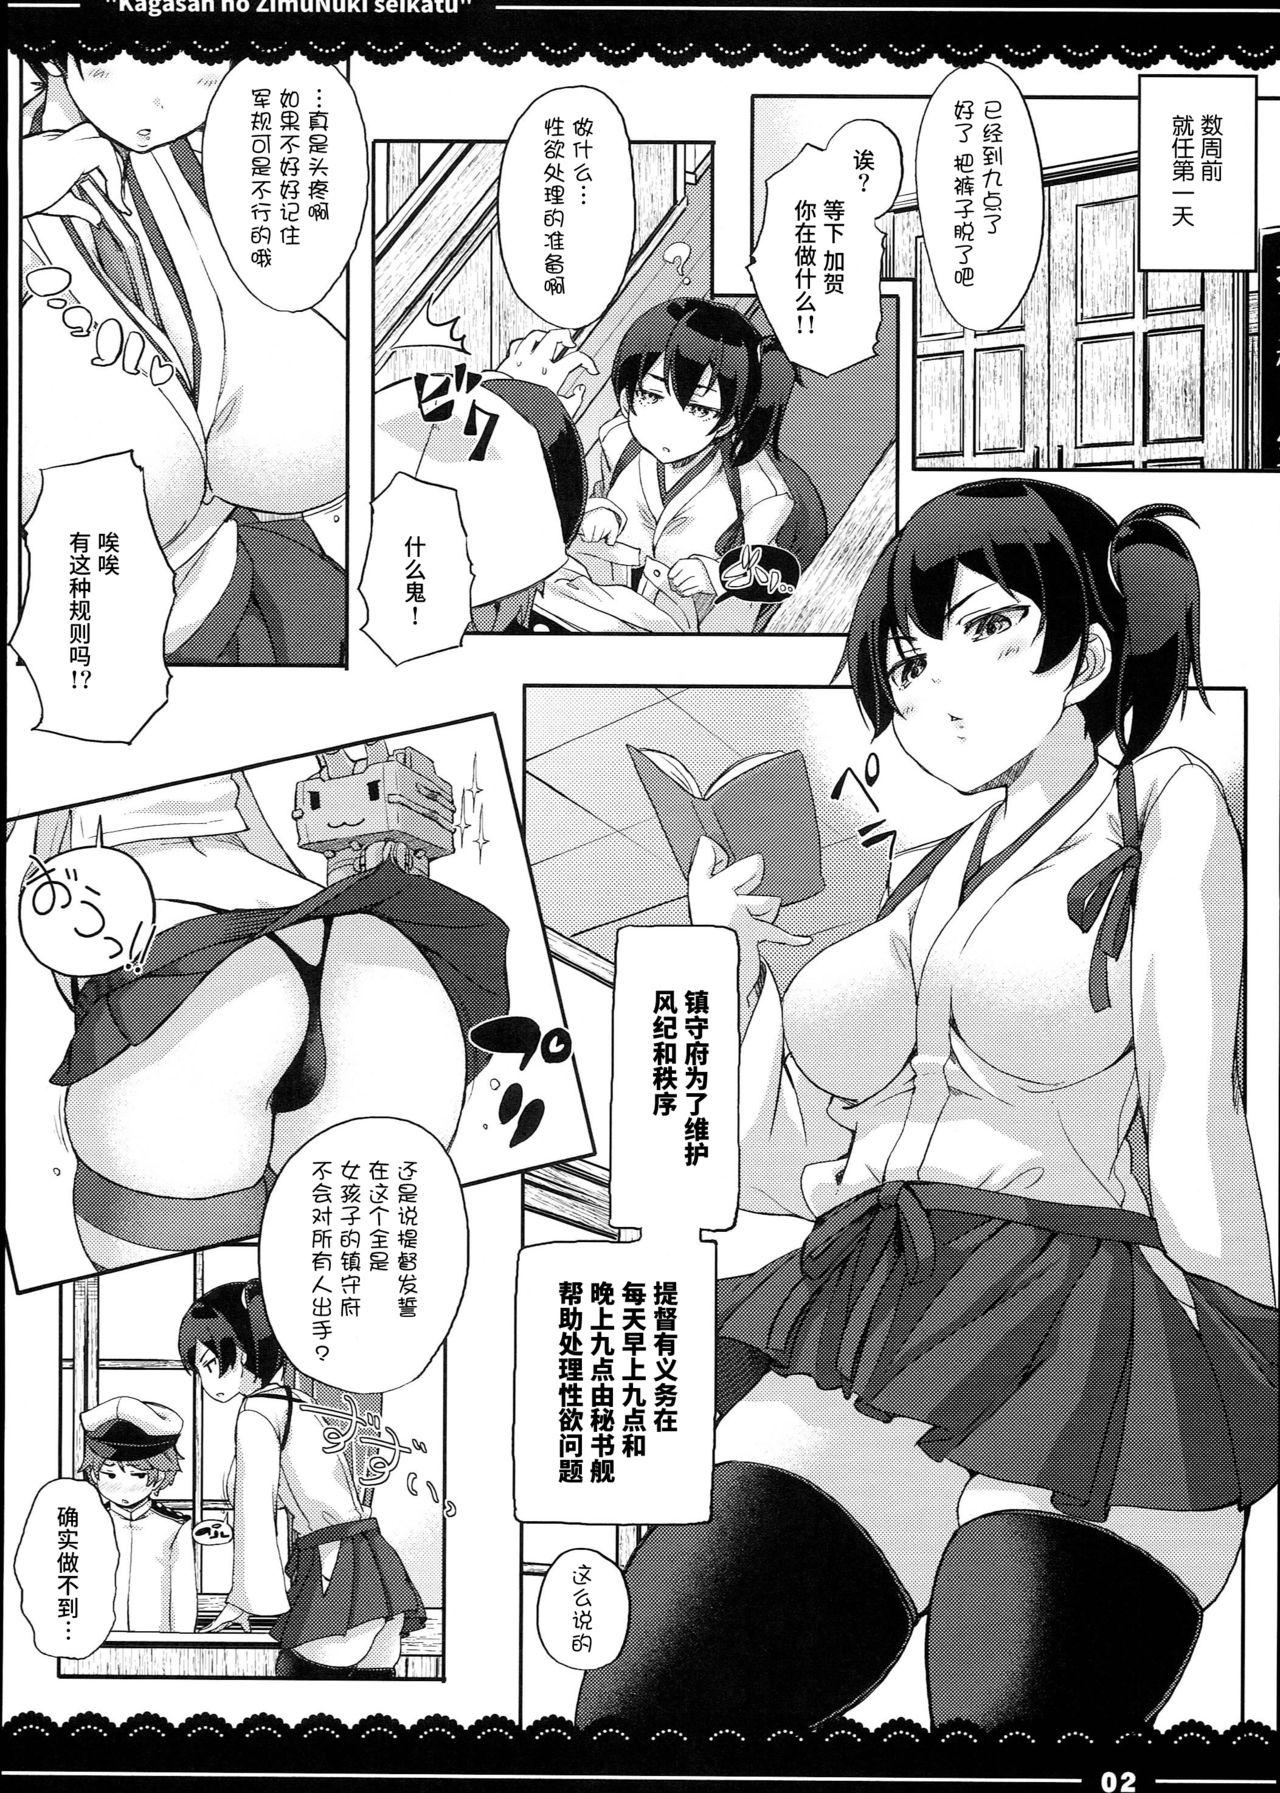 Petite Girl Porn Kaga-san no Jimunuki Seikatsu - Kantai collection Step Sister - Page 4